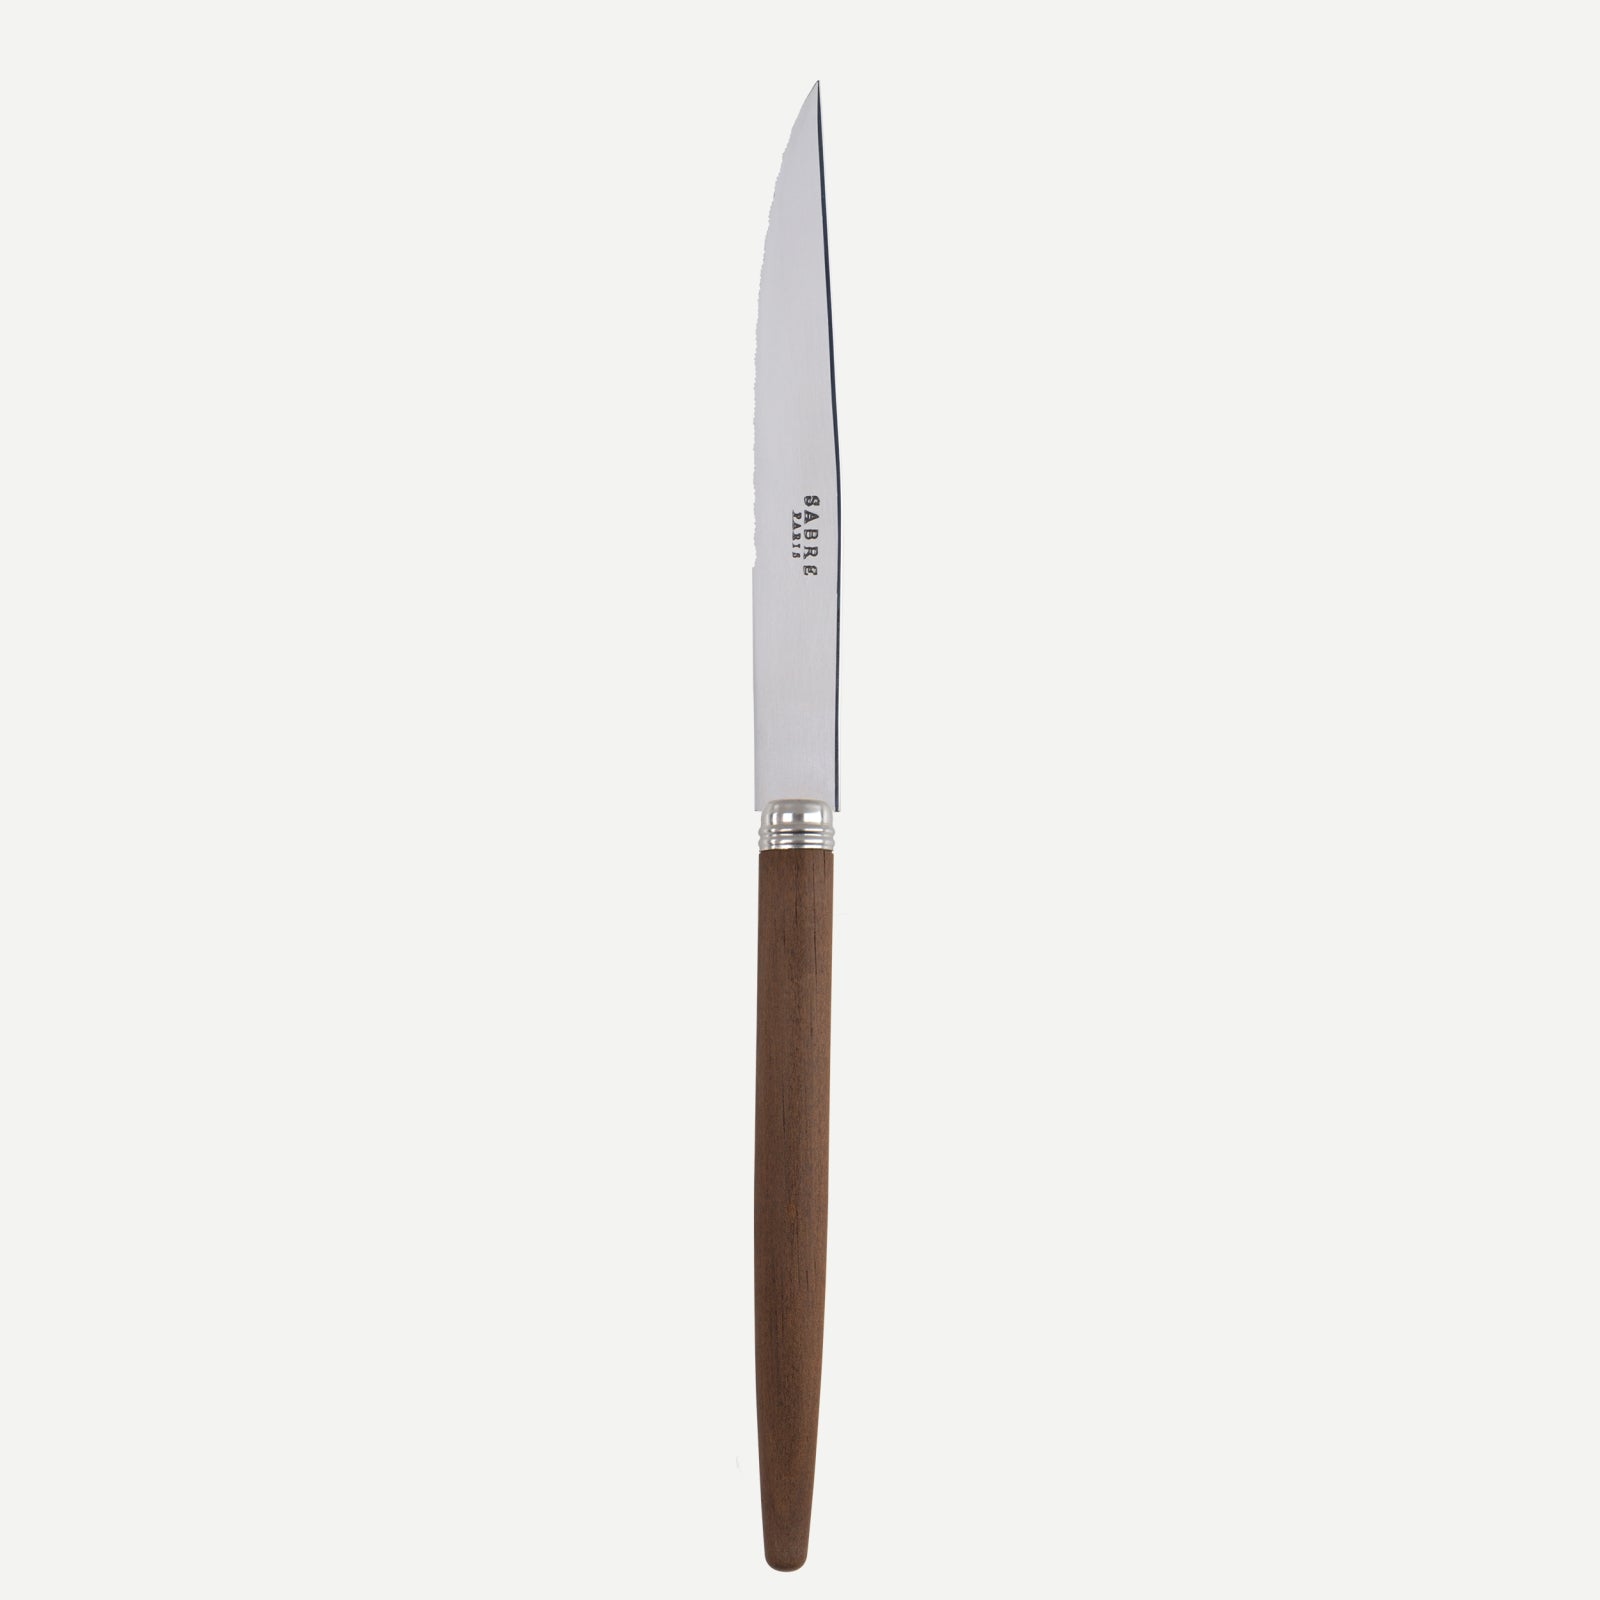 Steack knife - Jonc - Dark wood